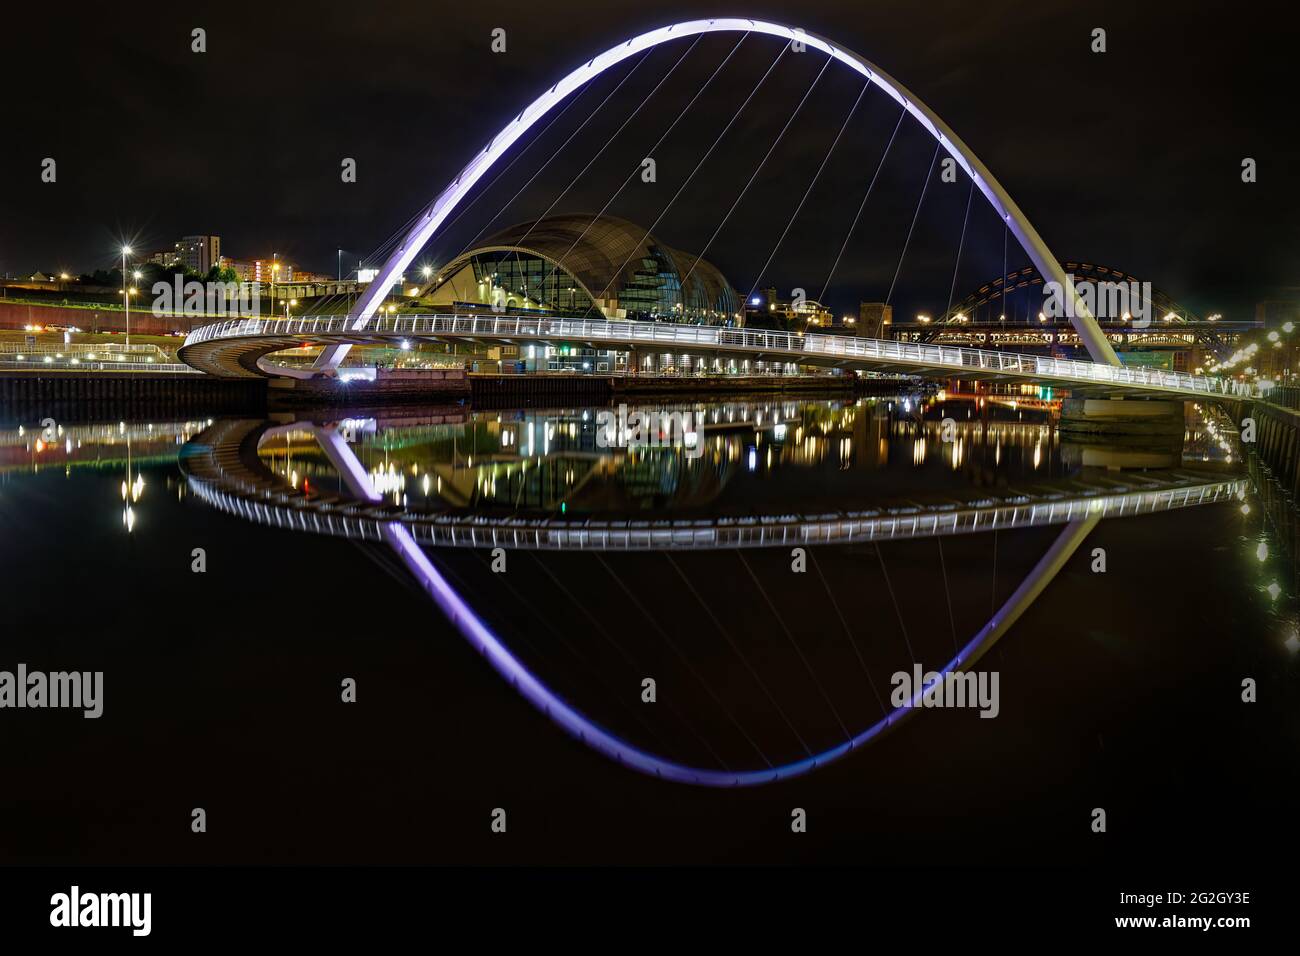 Newcastle's Millennium Bridge Reflecting On The River Tyne at Night. Stock Photo